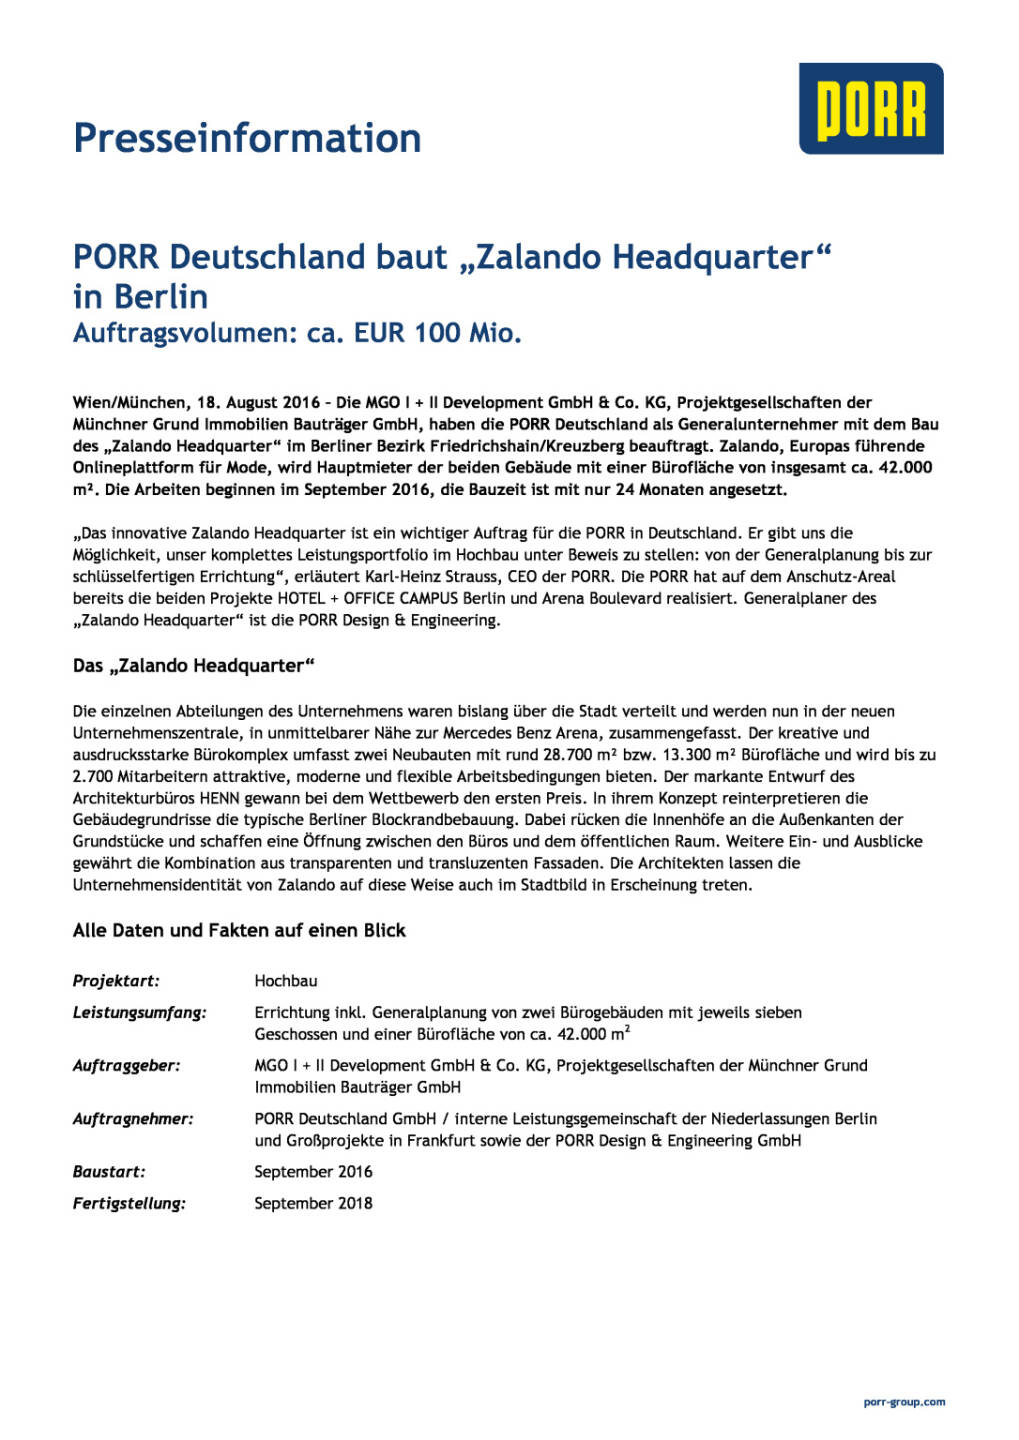 Porr Deutschland baut „Zalando Headquarter“ in Berlin , Seite 1/2, komplettes Dokument unter http://boerse-social.com/static/uploads/file_1637_porr_deutschland_baut_zalando_headquarter_in_berlin.pdf